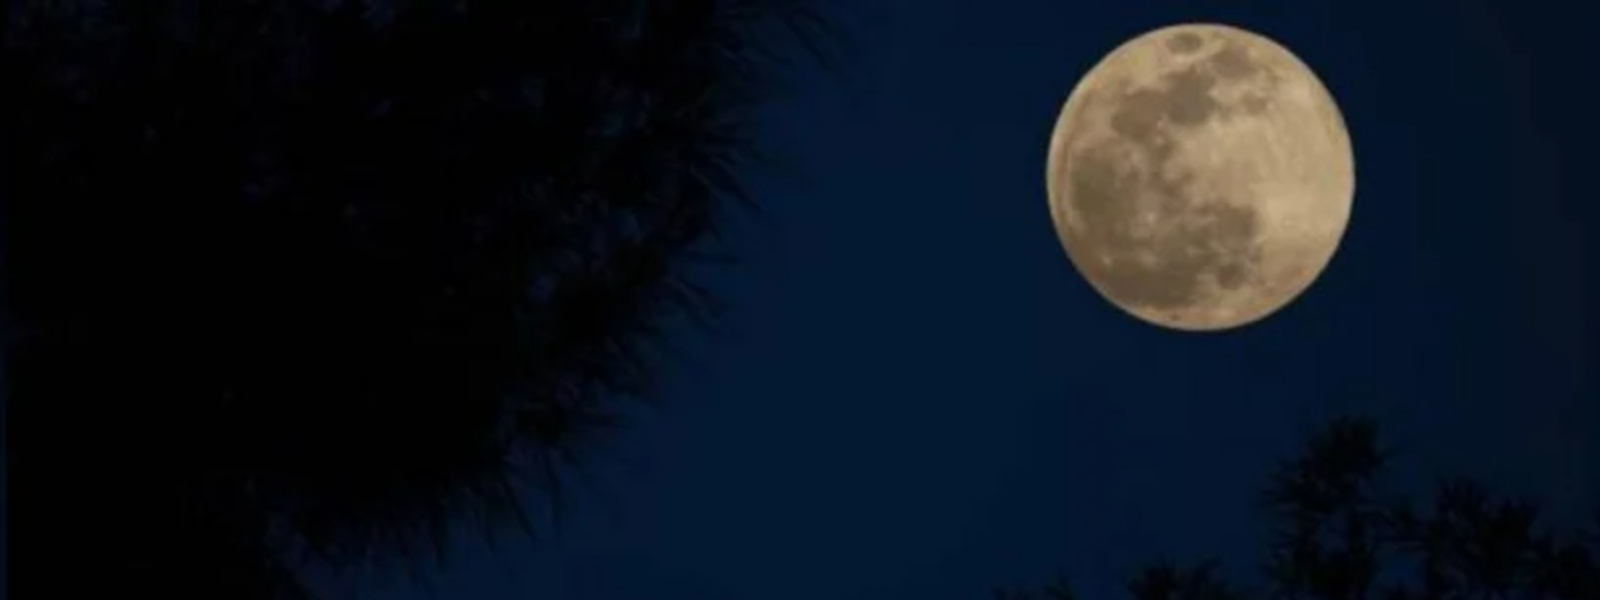 Penumbral Lunar Eclipse over Sri Lankan sky tonight